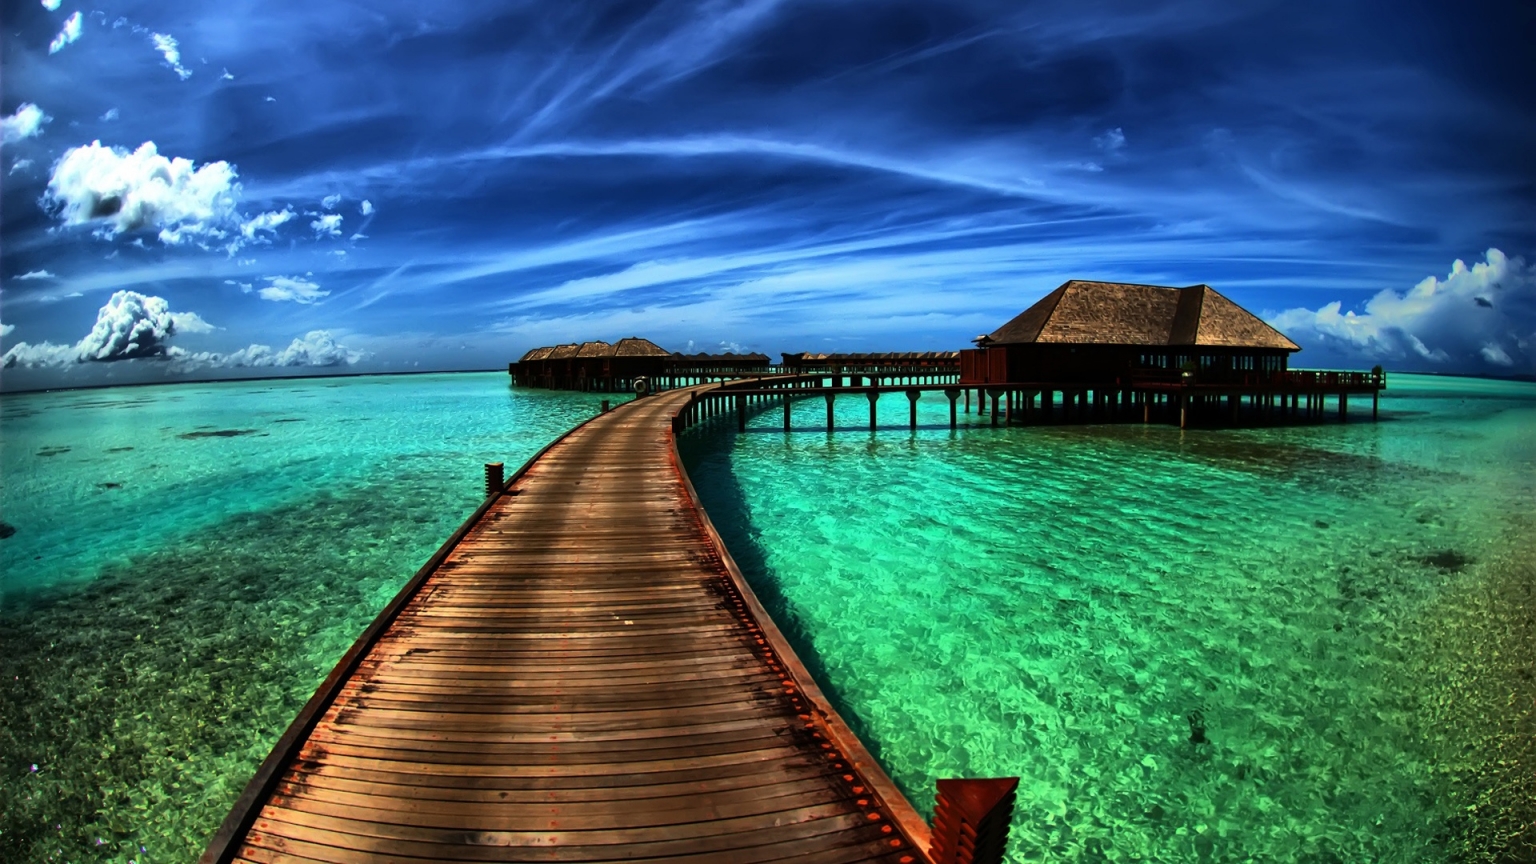 Amazing Sea Resort for 1536 x 864 HDTV resolution